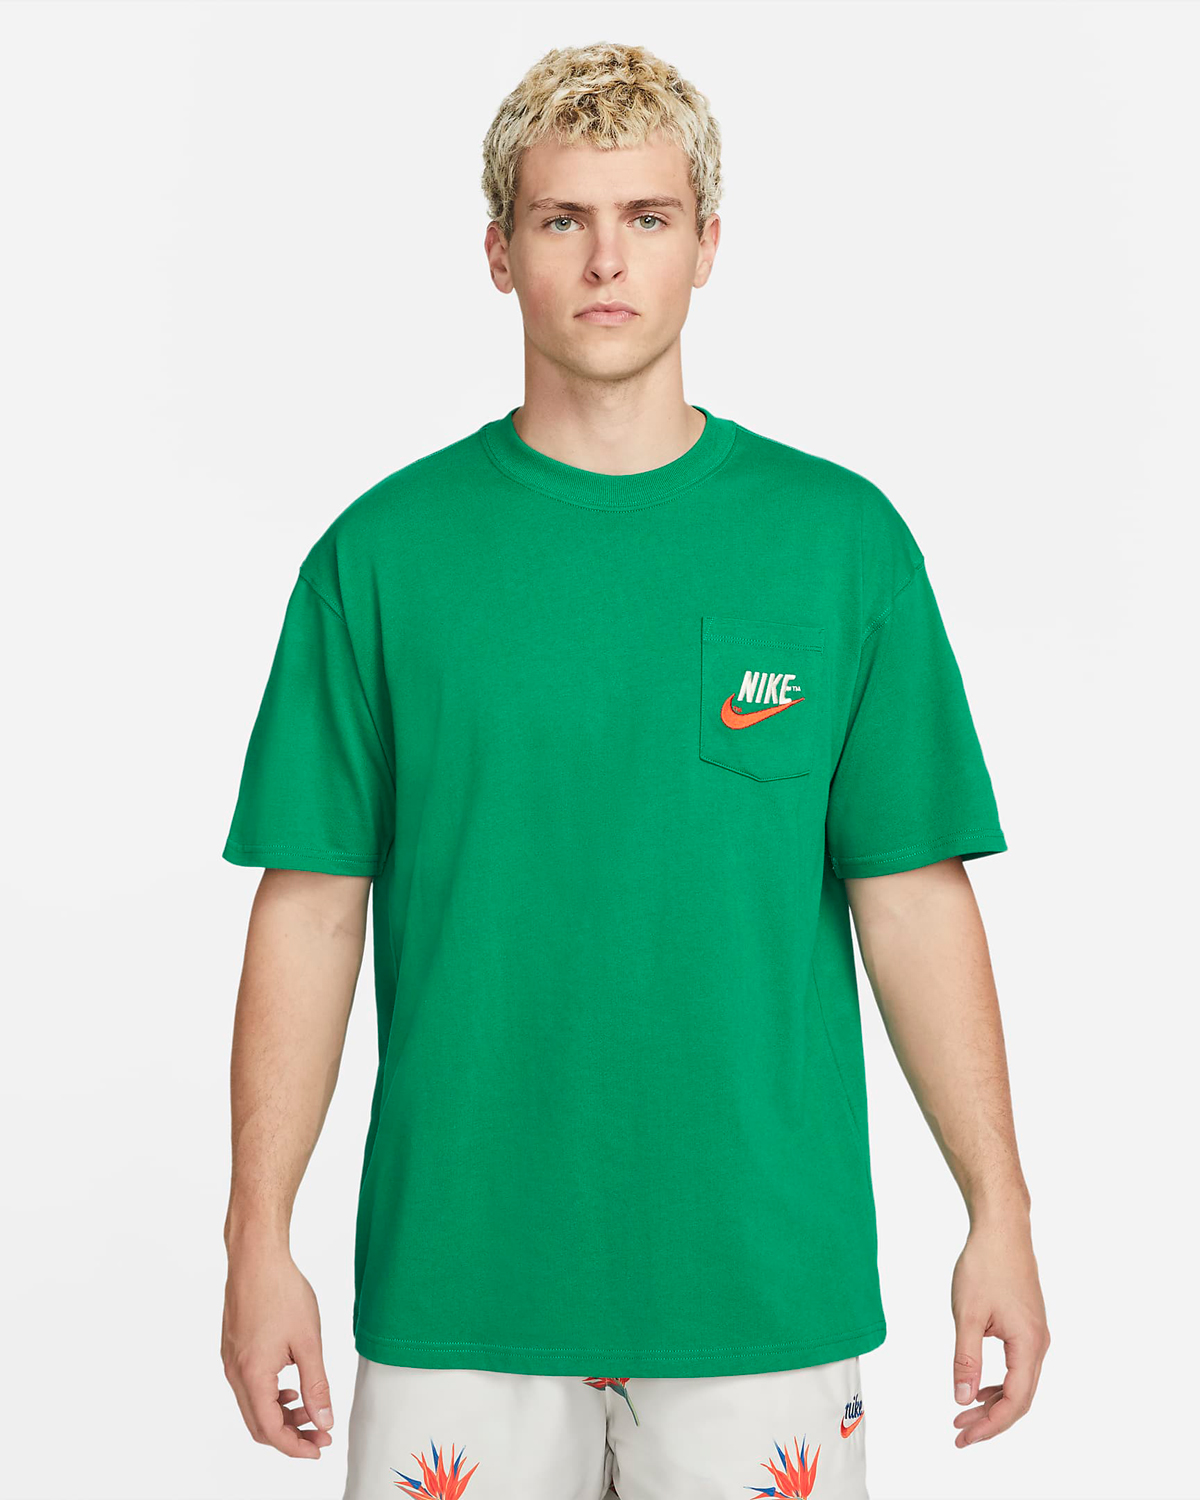 Nike-Malachite-Green-T-Shirt-1